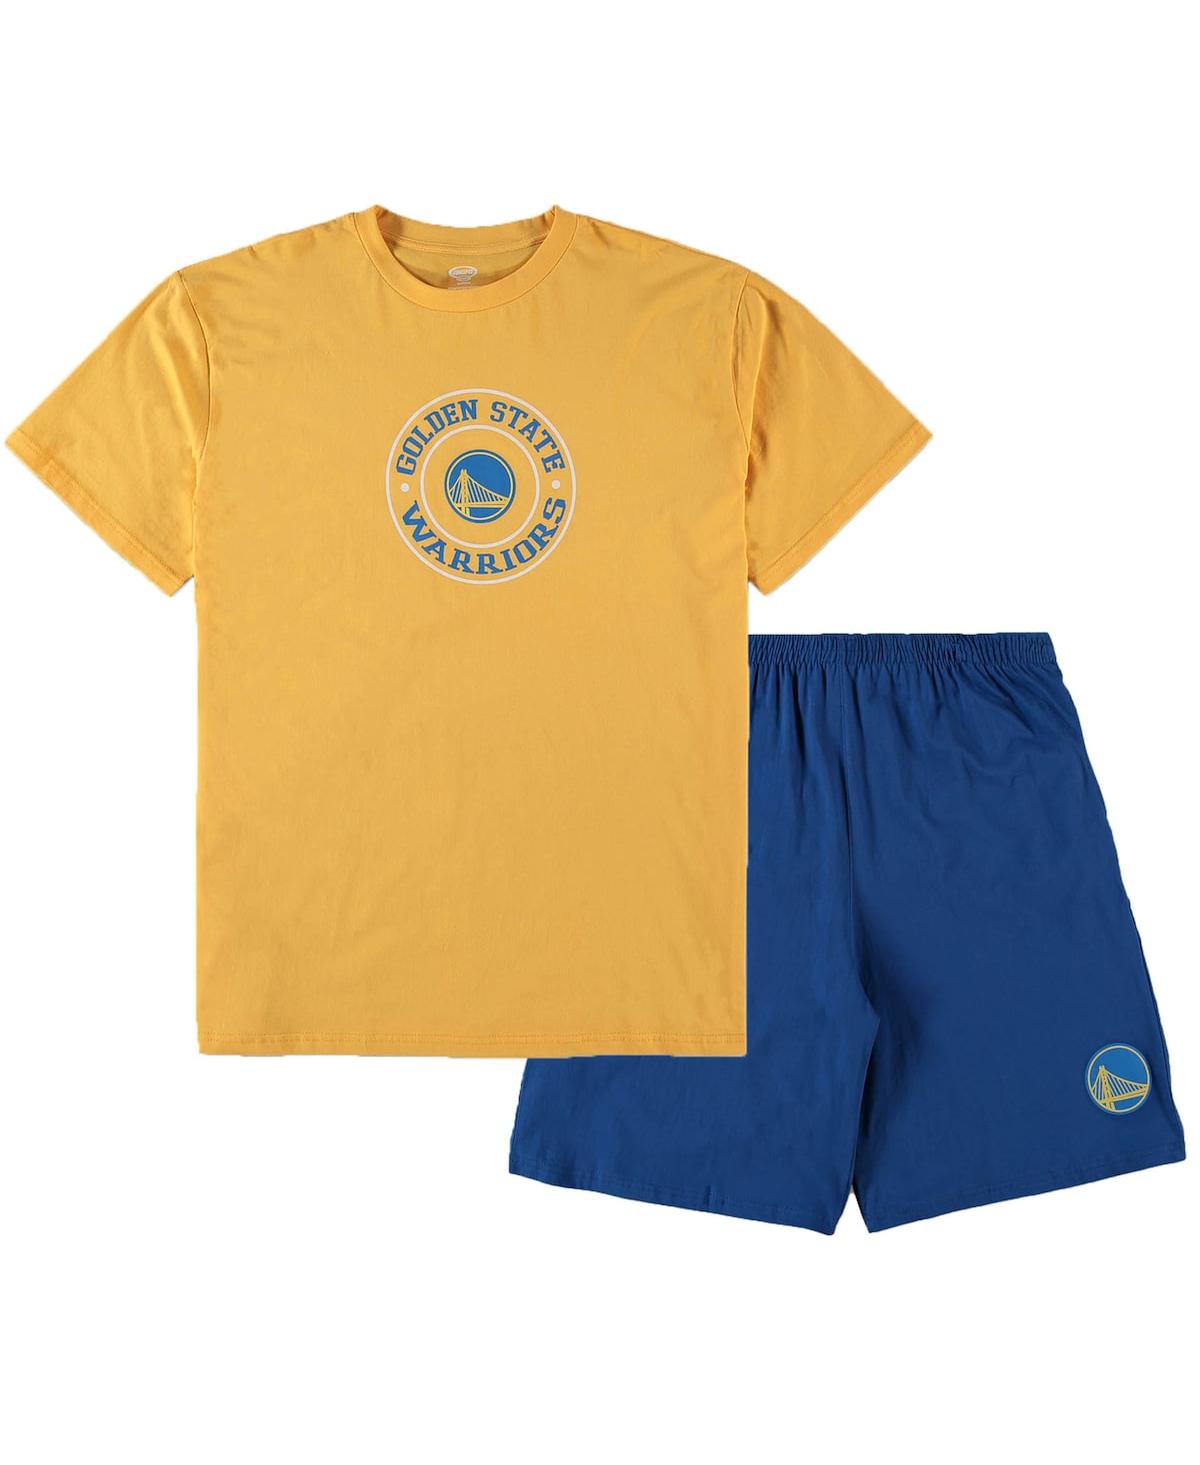 Men's Concepts Sport Gold, Royal Golden State Warriors Big and Tall T-shirt and Shorts Sleep Set - Gold, Royal